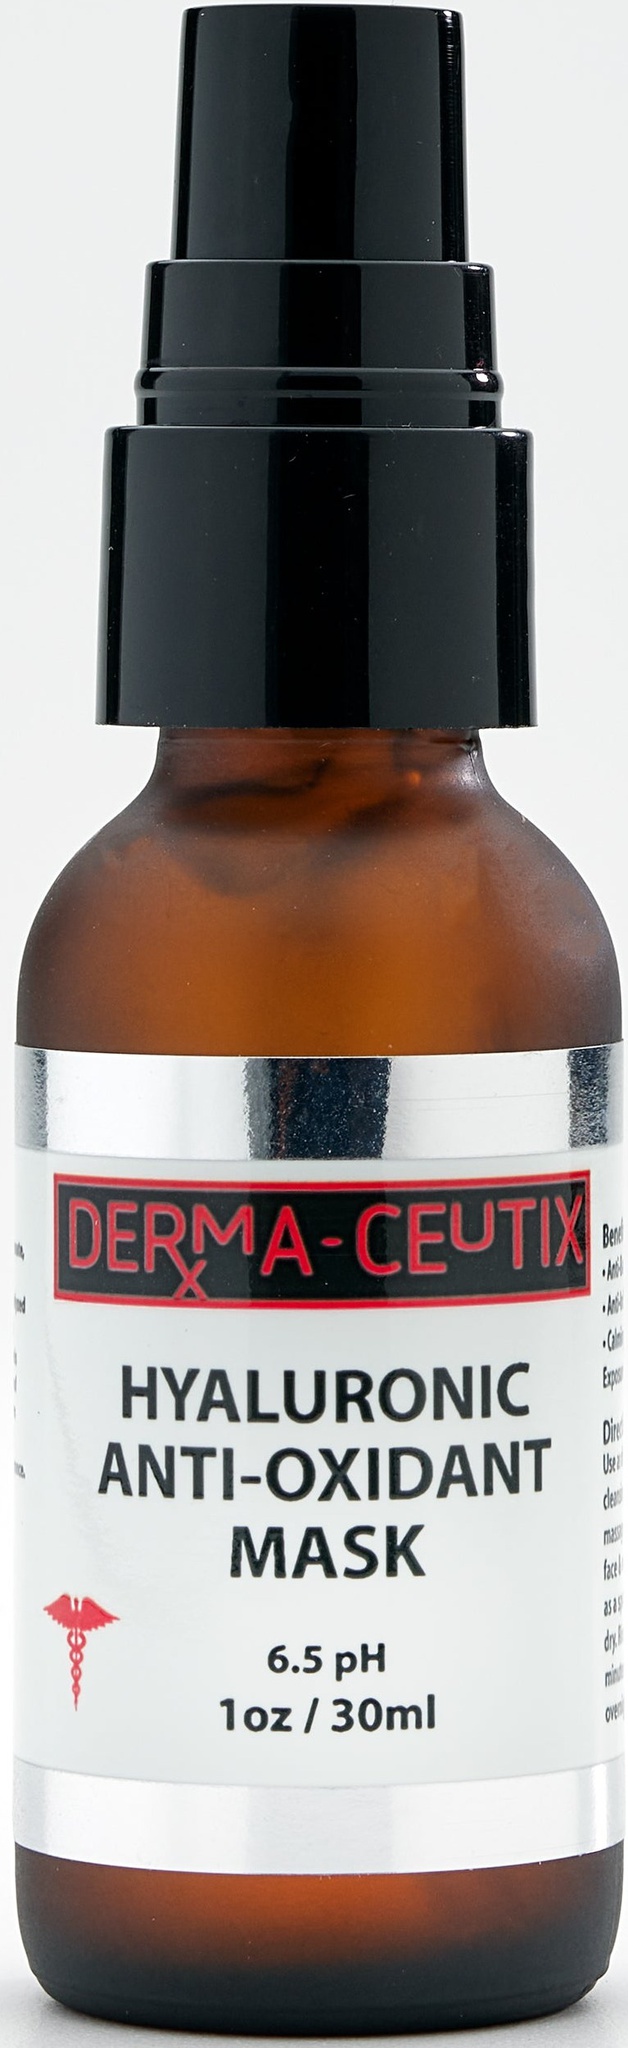 Derma-ceutix Hyaluronic Anti-oxidant Mask